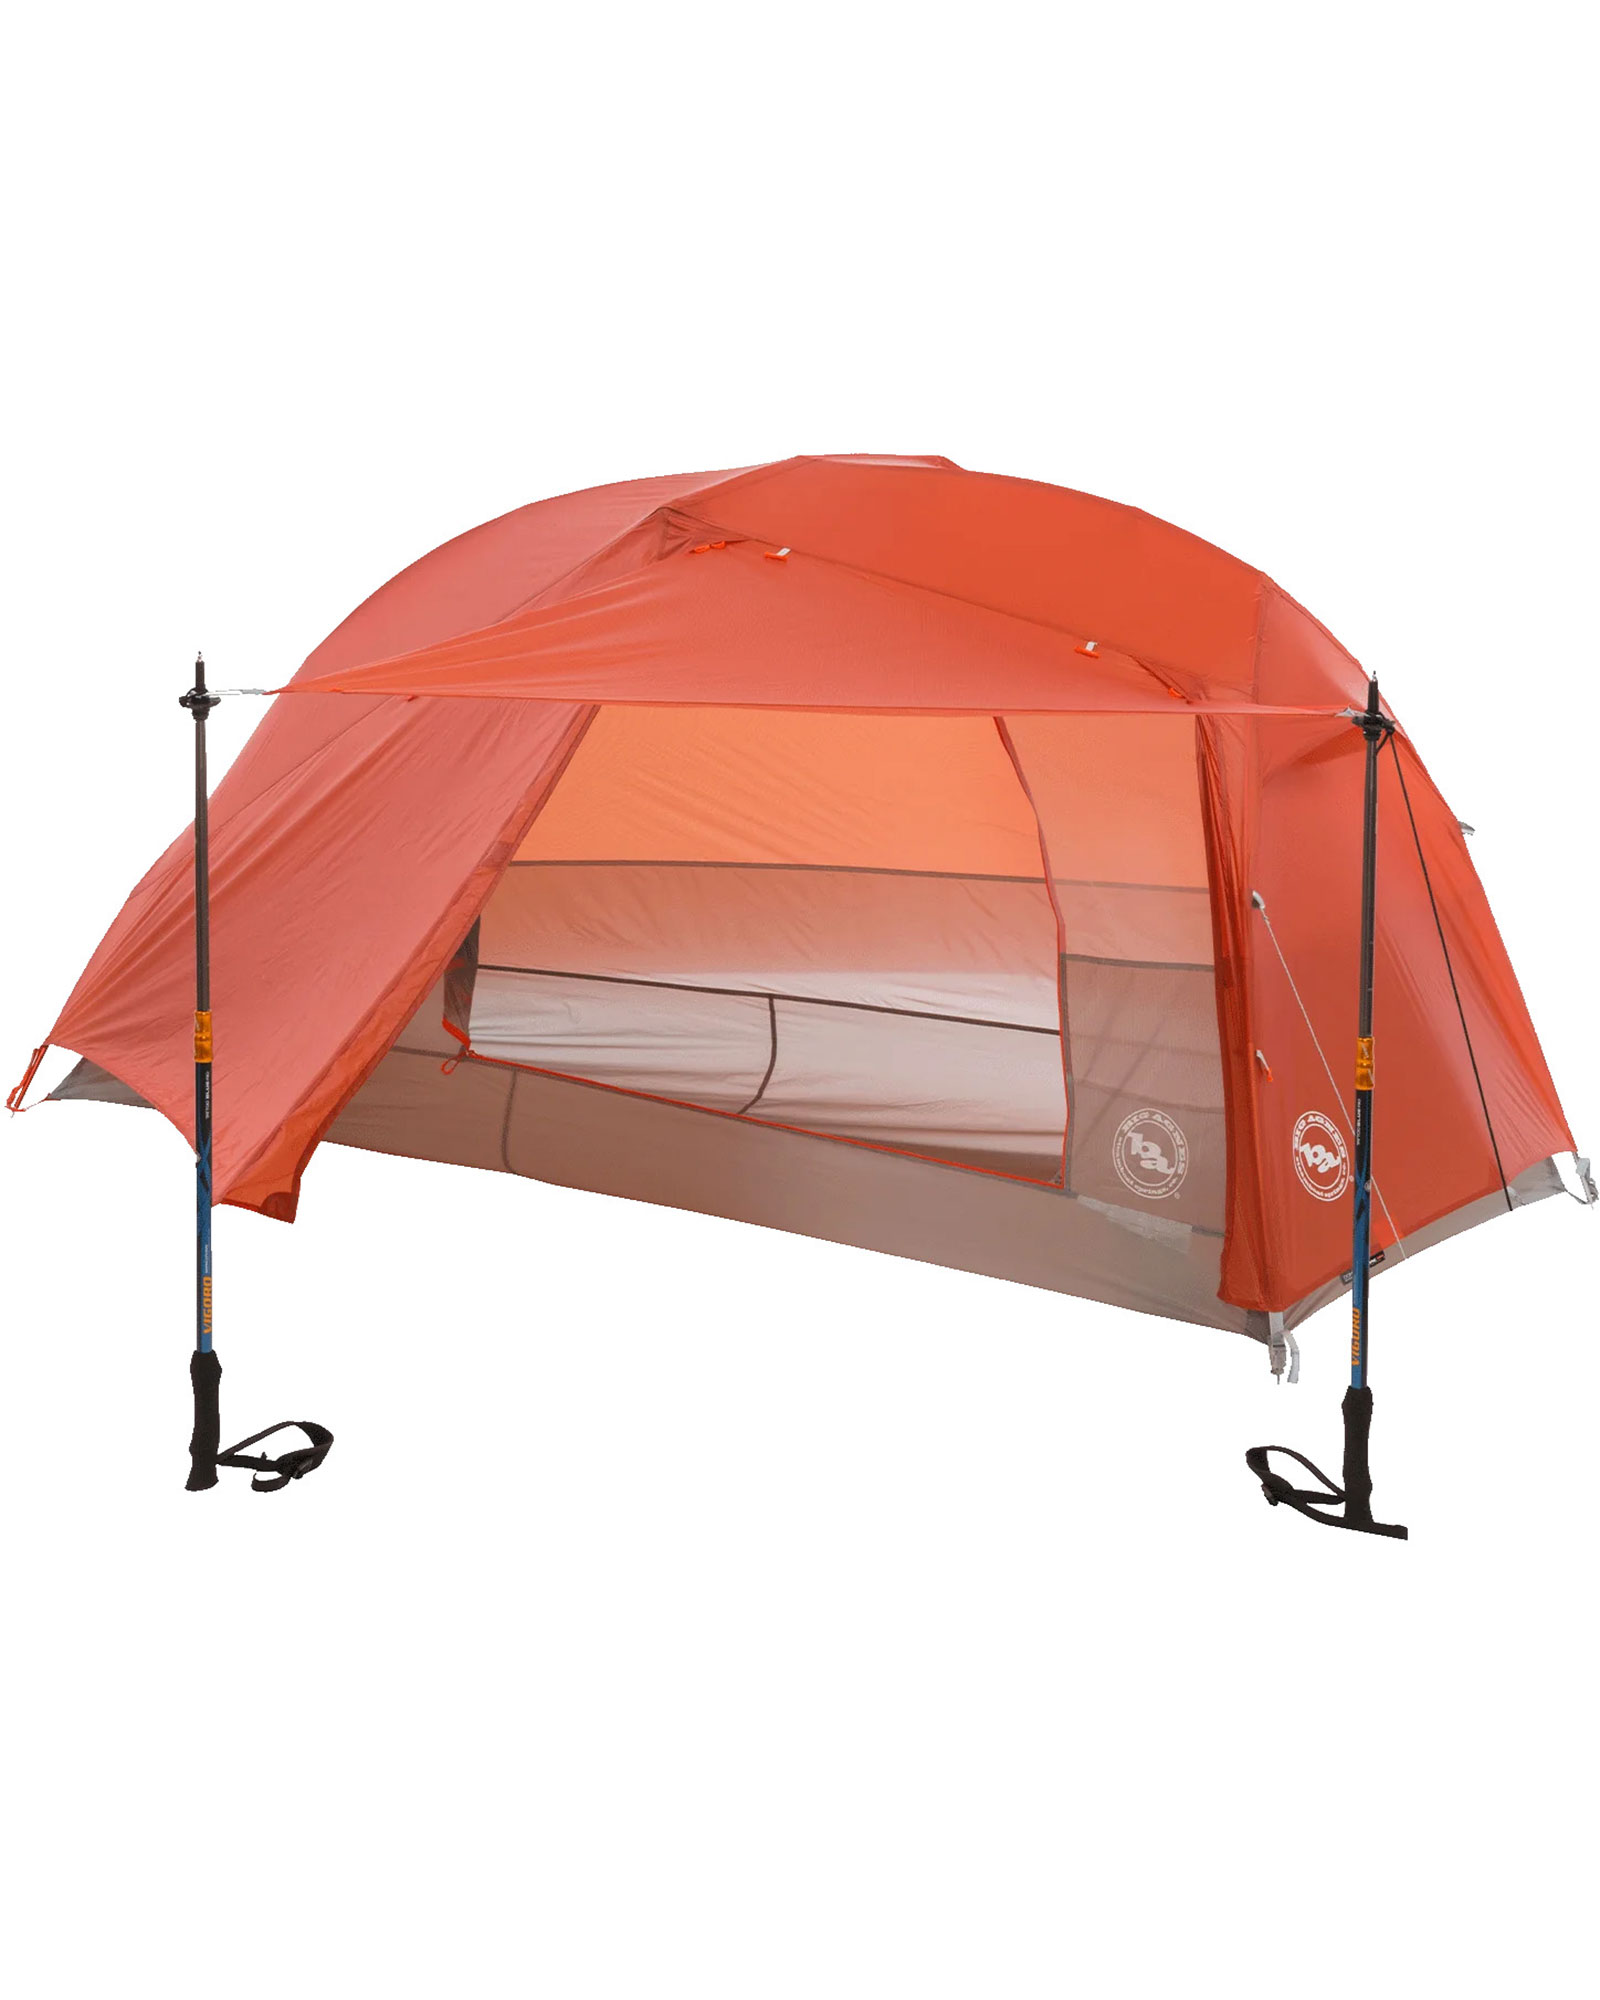 Big Agnes Copper Spur HV UL1 Tent - Orange